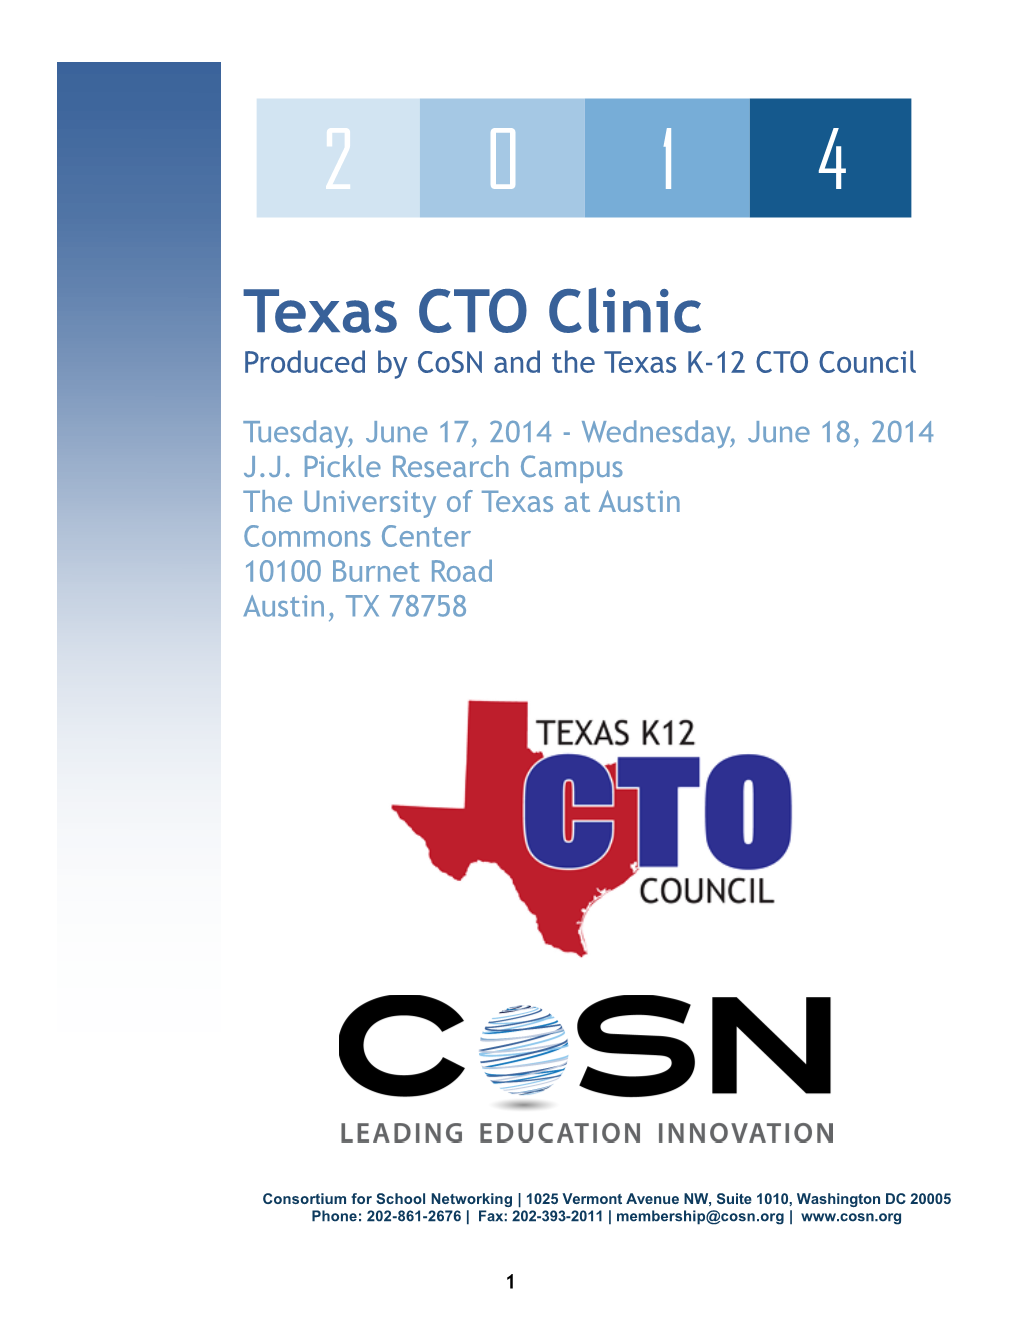 Texas CTO Clinic Produced by Cosn and the Texas K-12 CTO Council